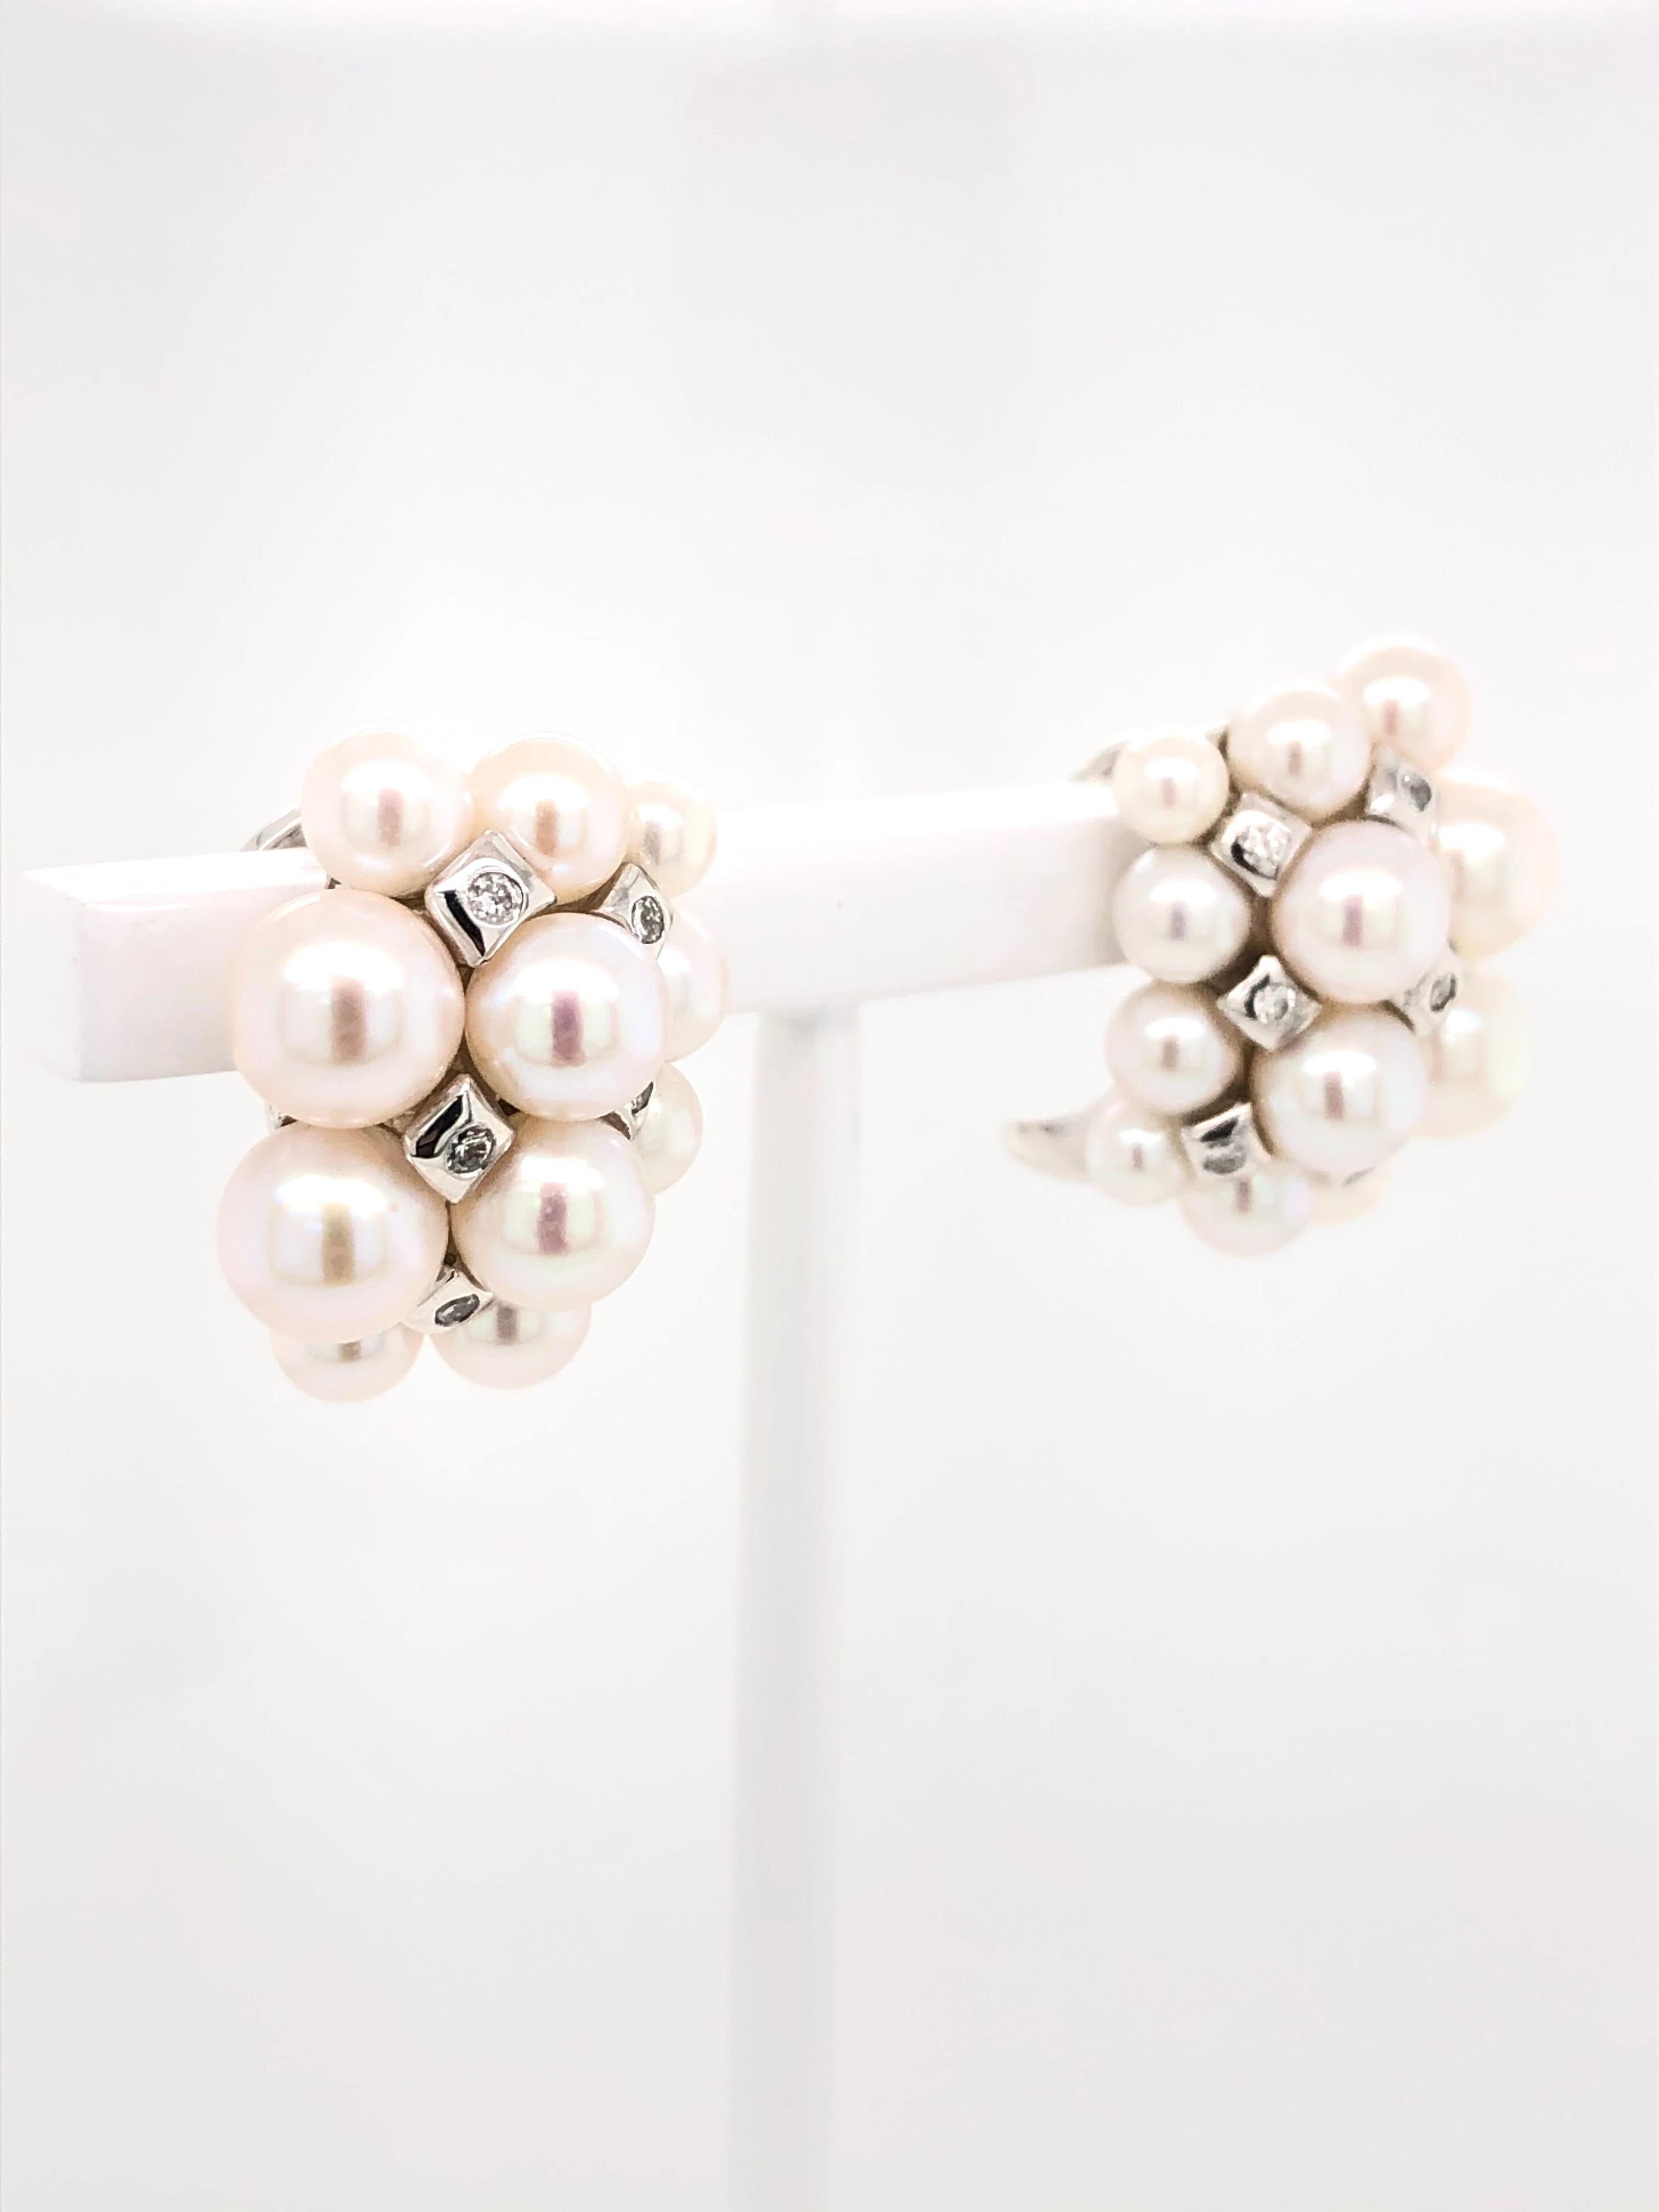 Brilliant Cut Akoya Pearls with White Diamonds on White Gold 18 Karat Earrings